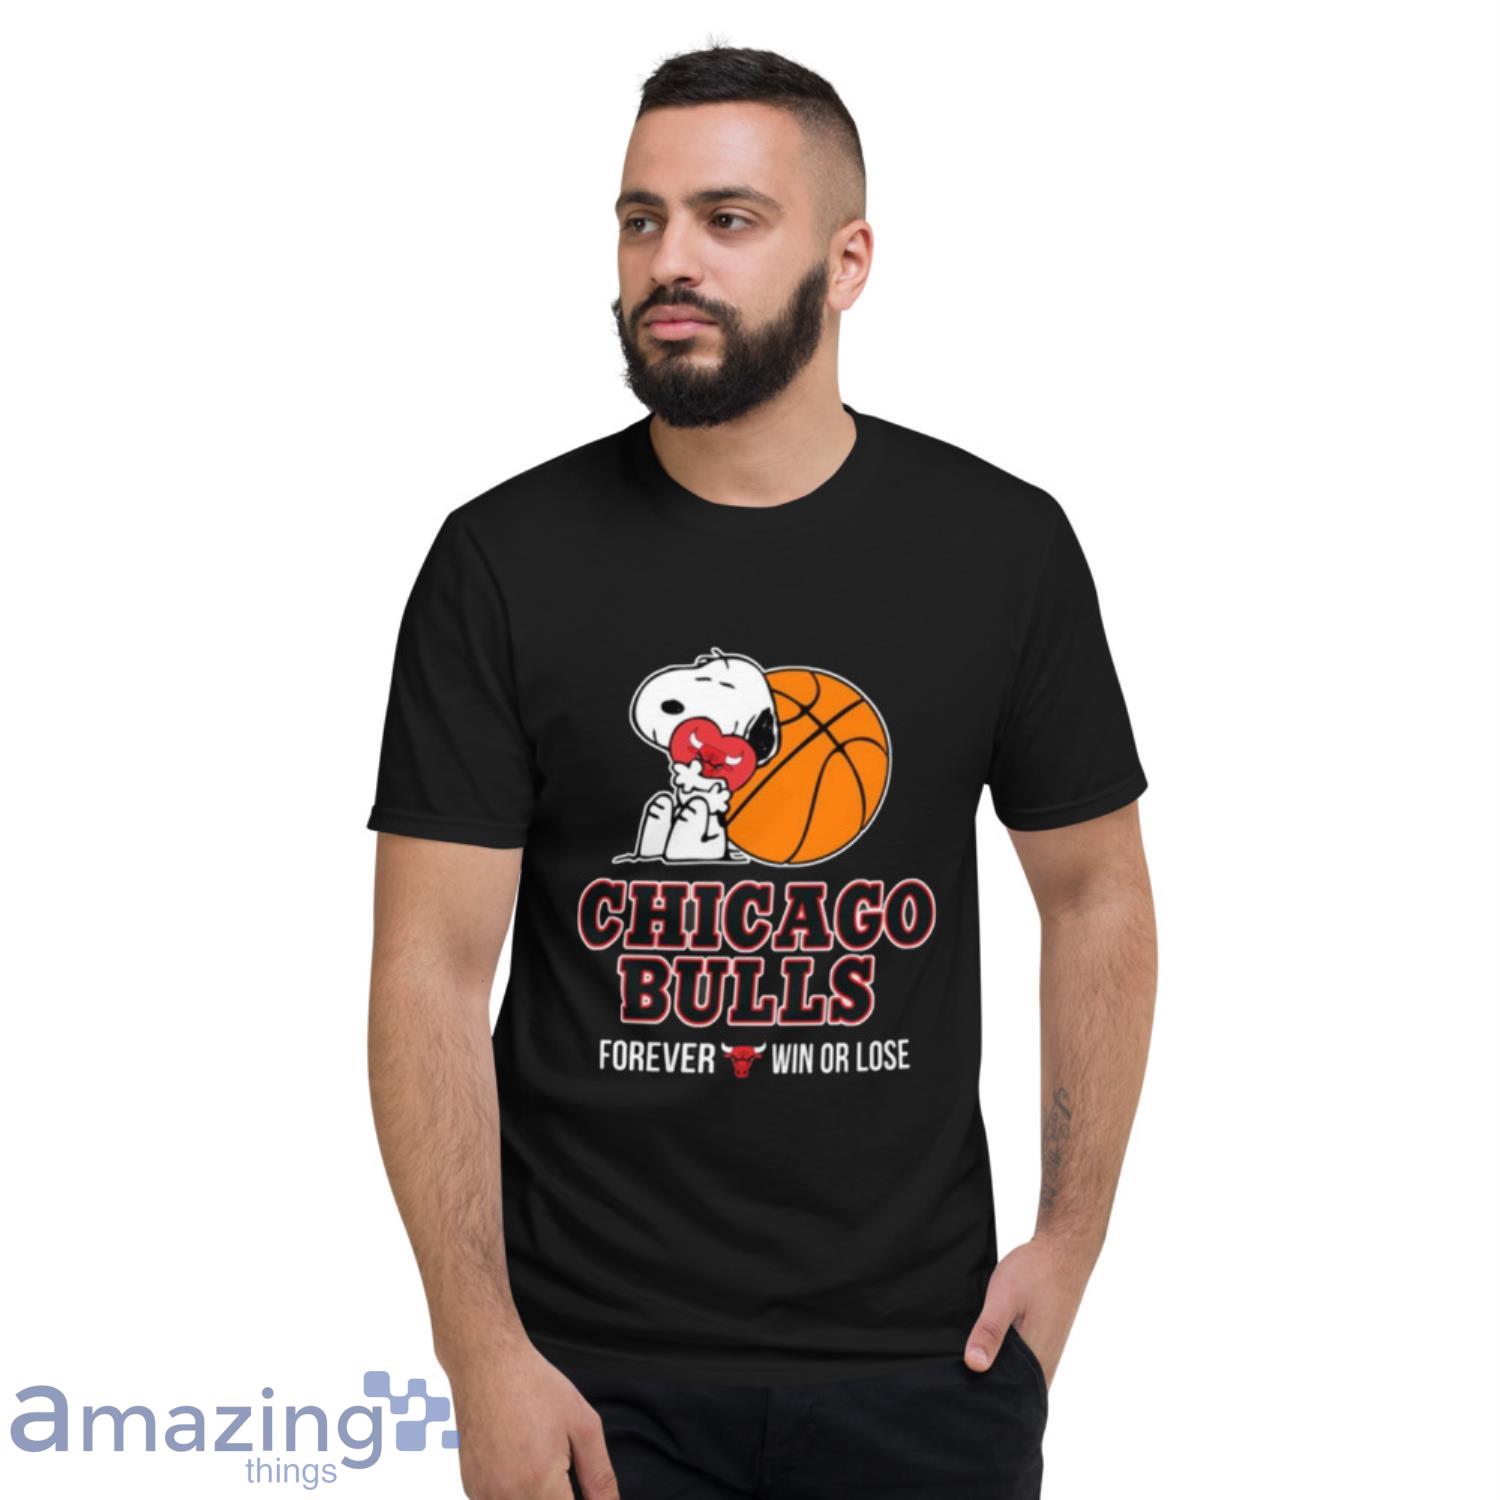 Sleeveless Chicago Bulls NBA maxi print T-shirt - Short Sleeve T